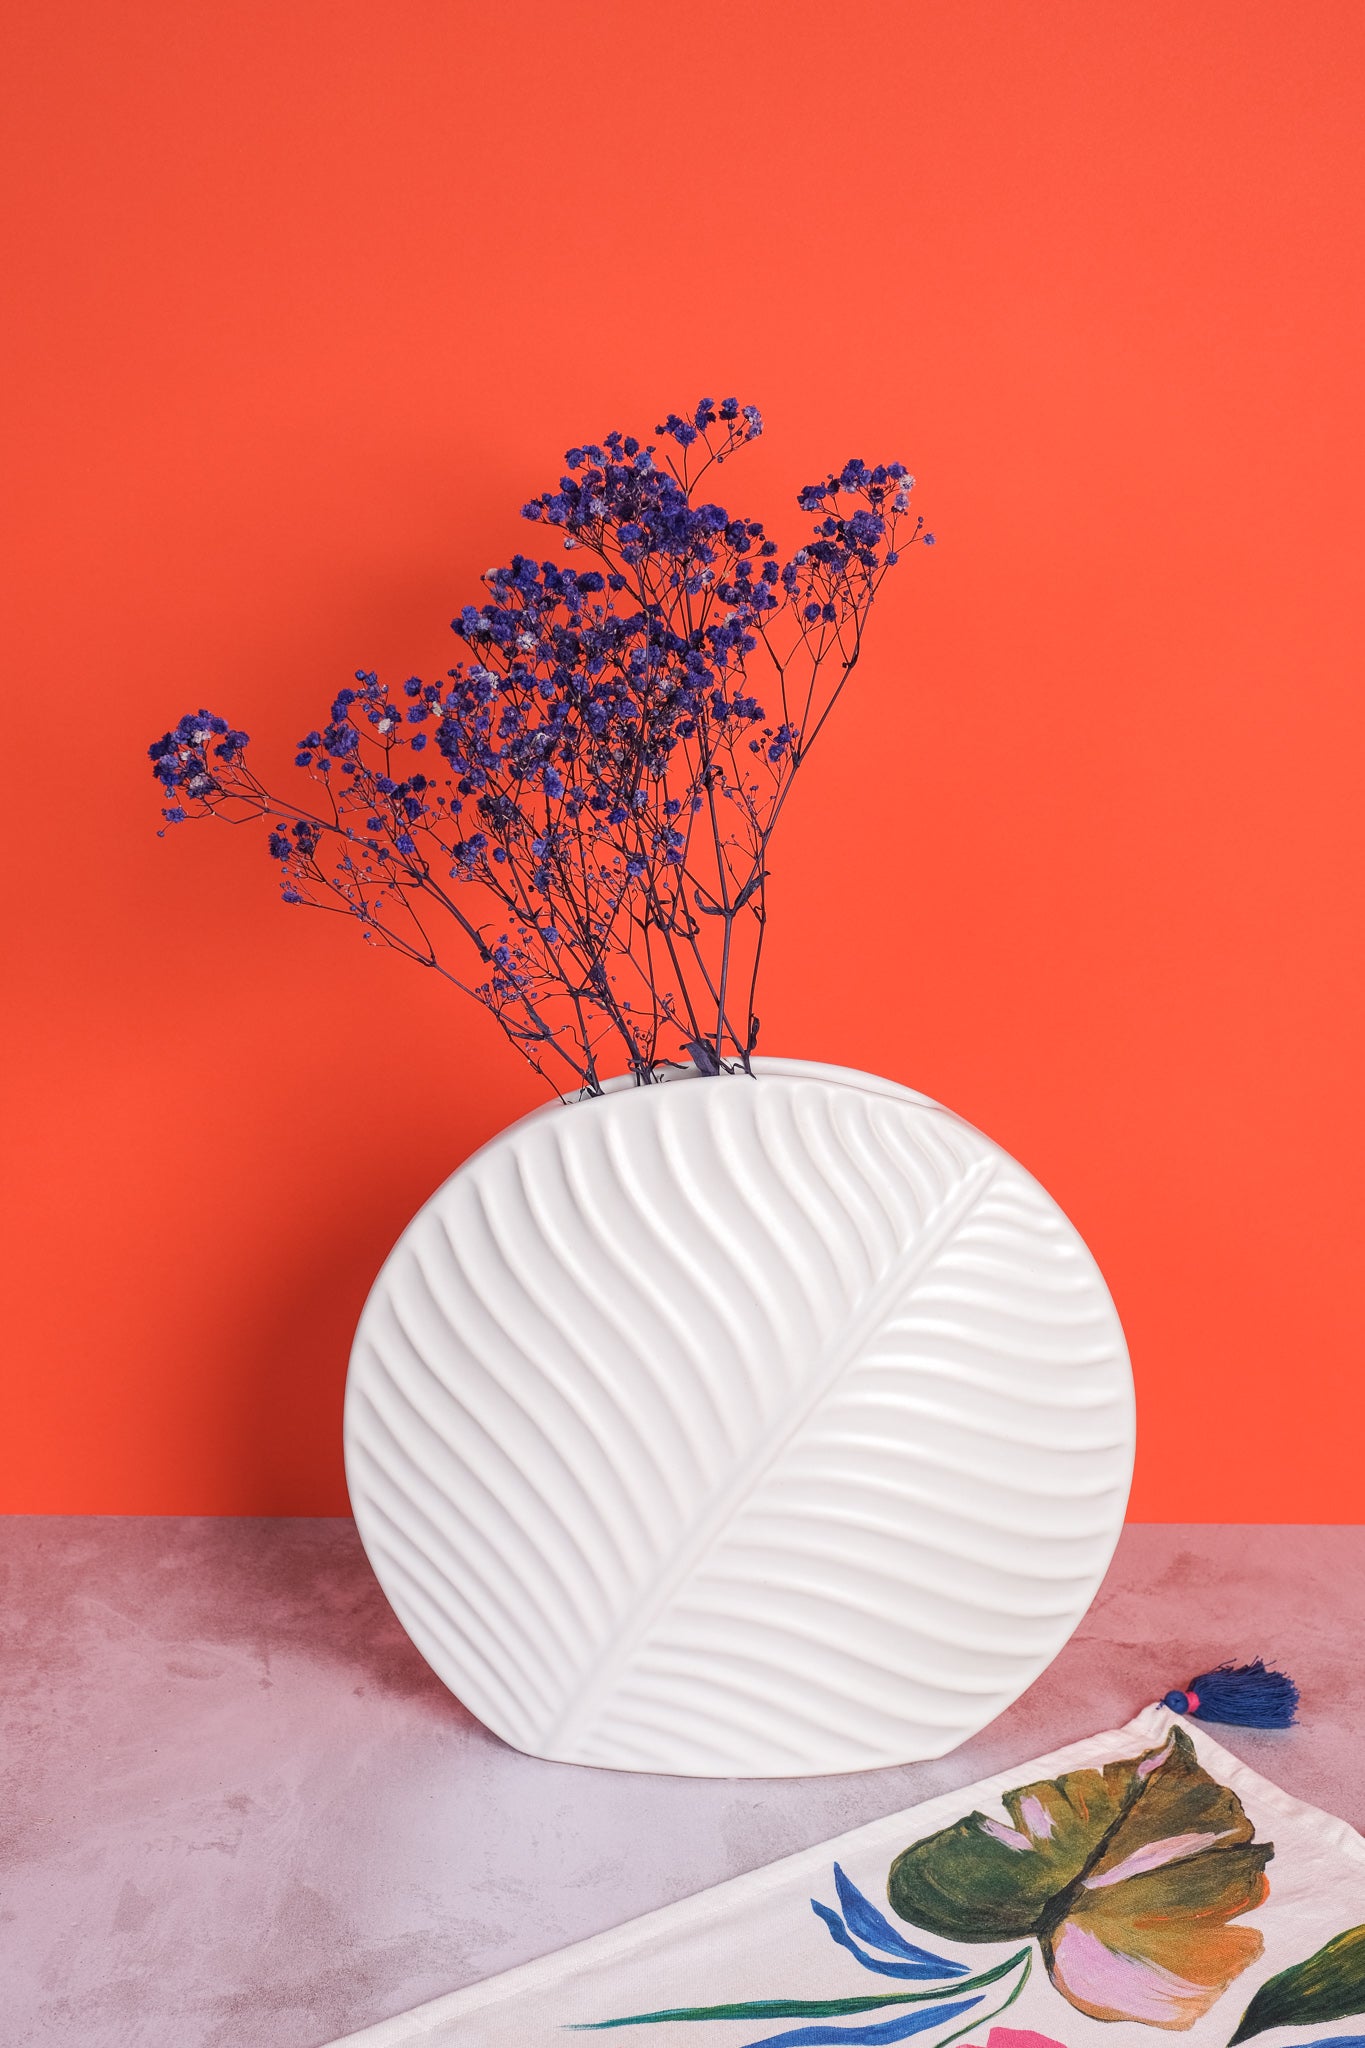 Large White Valence Ceramic Vase (31cm)